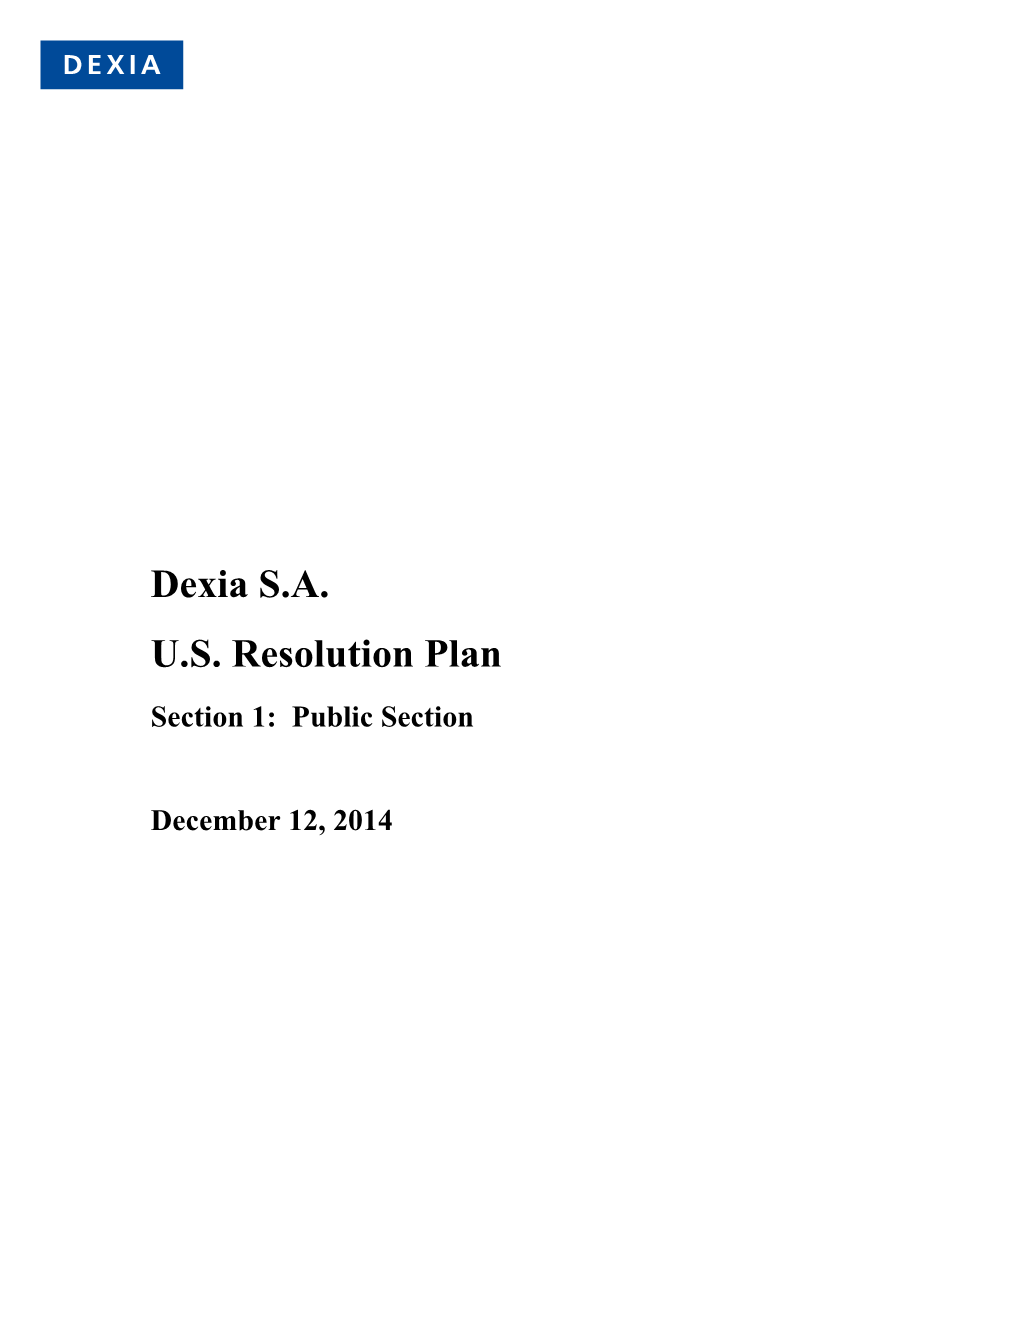 Dexia SAUS Resolution Plan